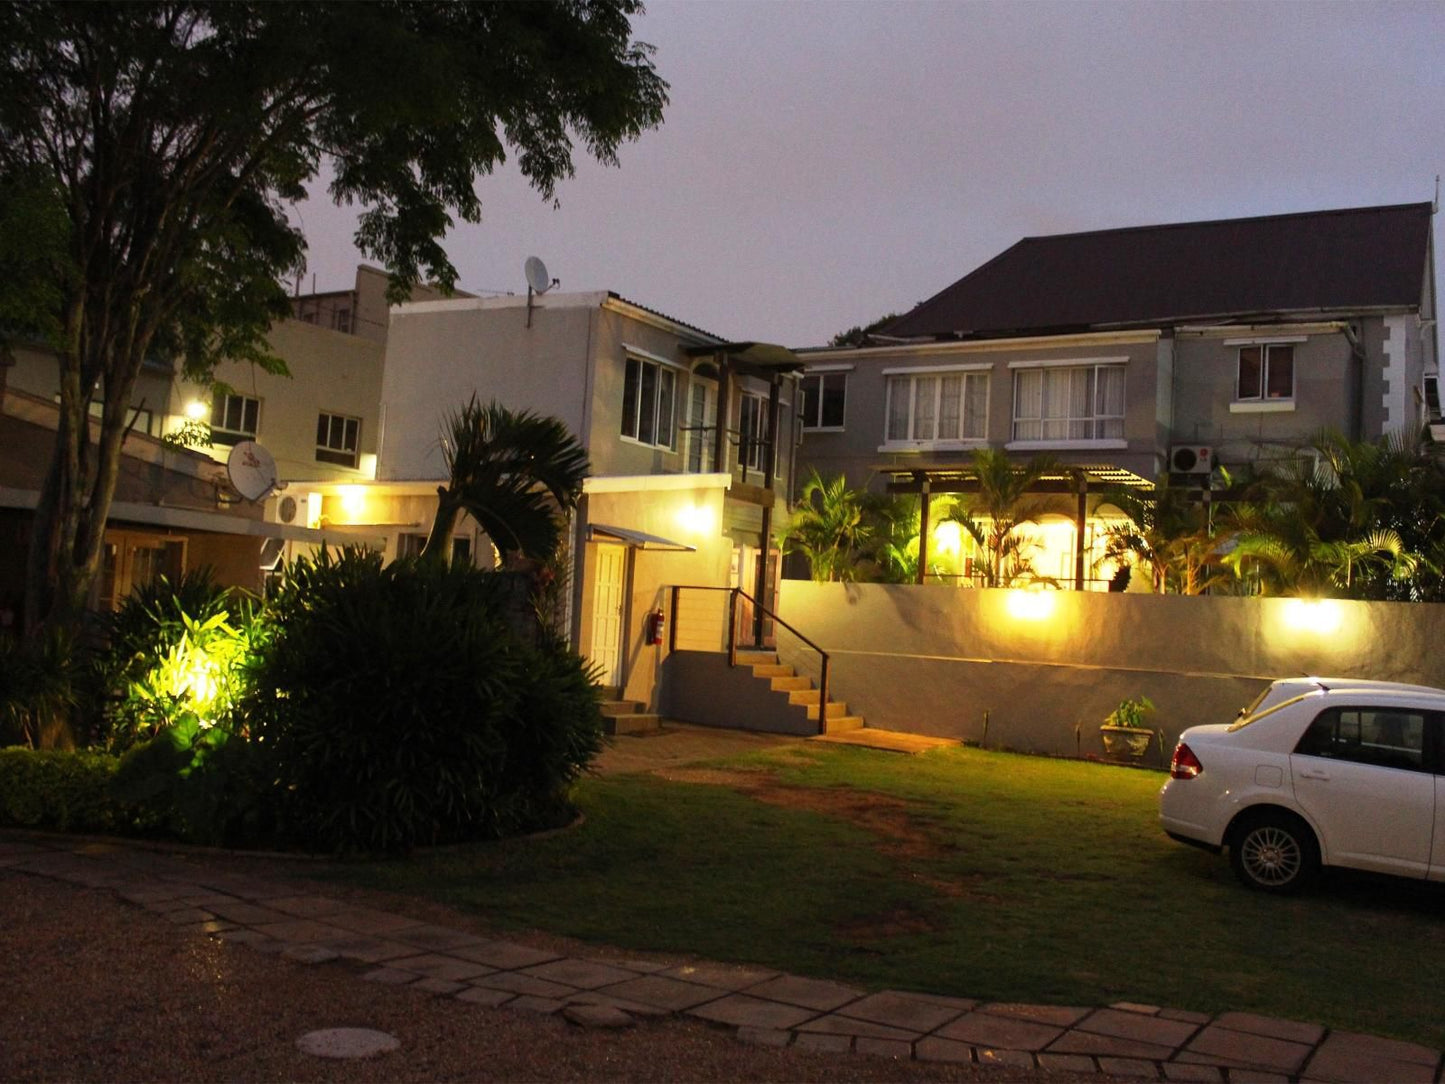 Bon Ami Morningside Durban Kwazulu Natal South Africa House, Building, Architecture, Palm Tree, Plant, Nature, Wood, Car, Vehicle